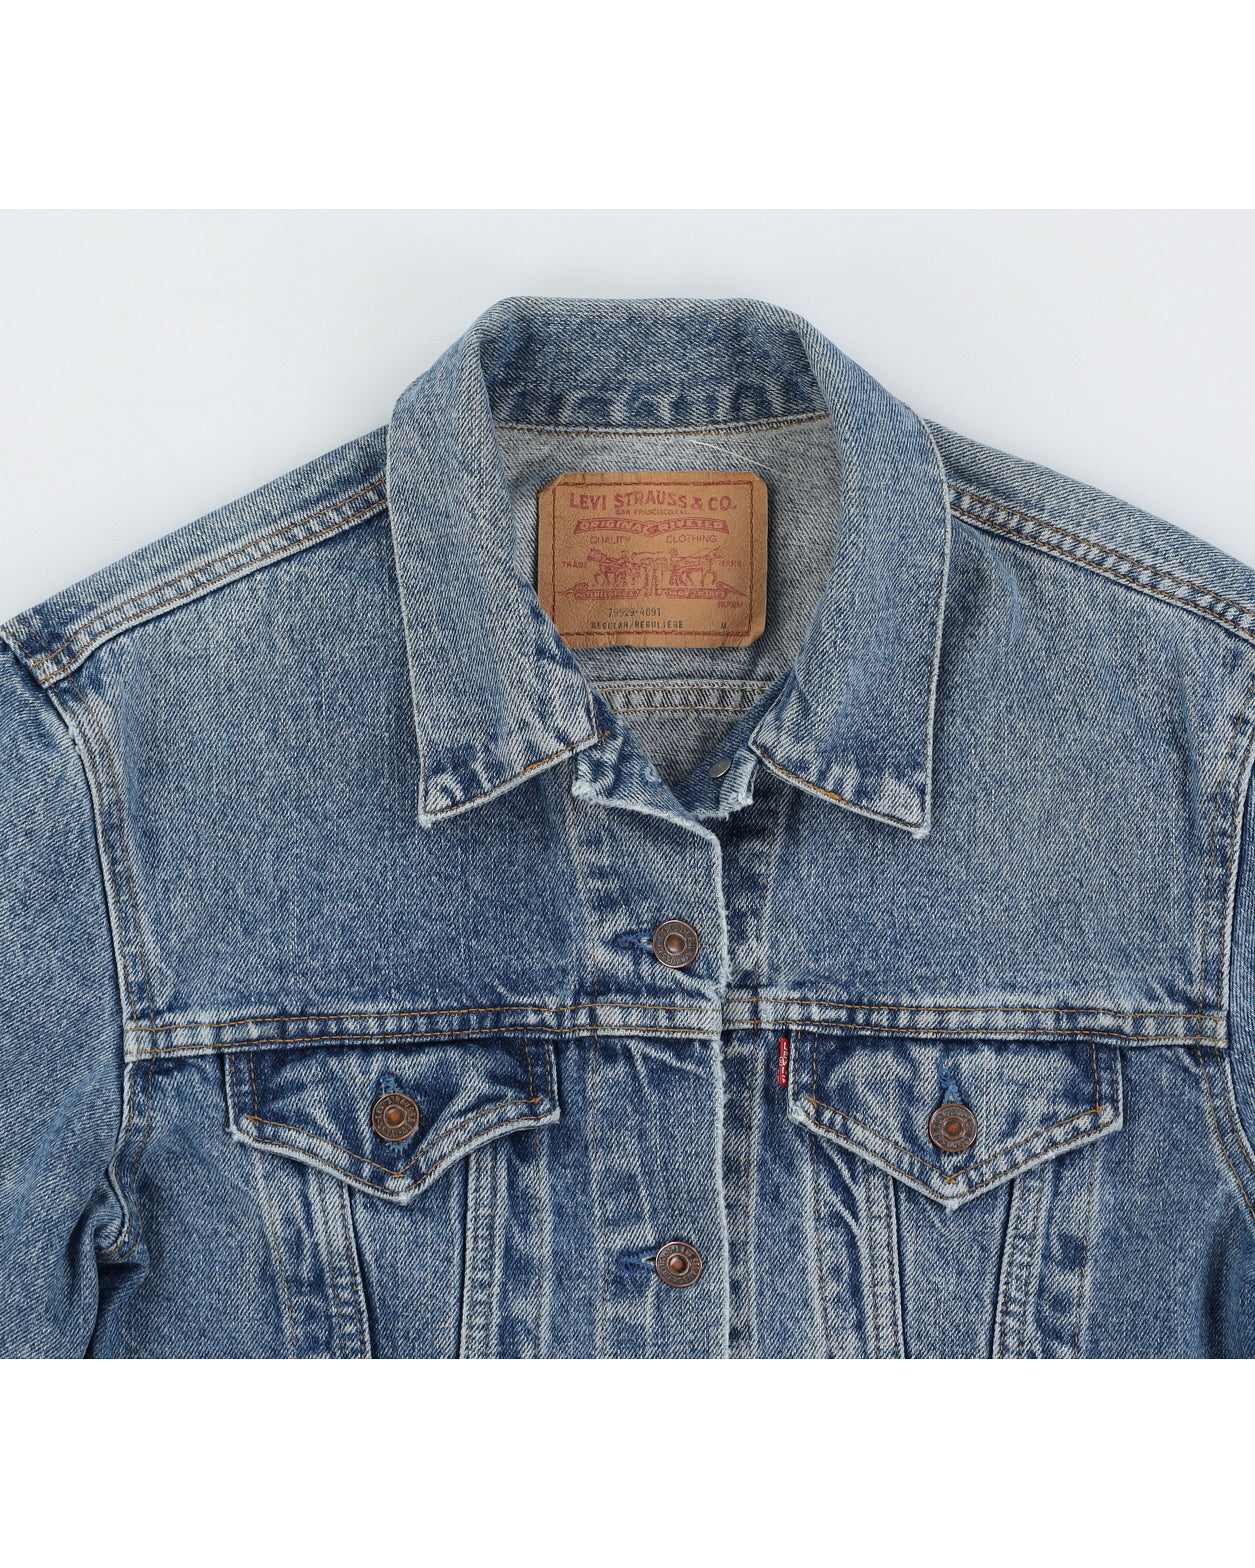 Vintage 70s Levi's Medium Wash Denim Jacket - M